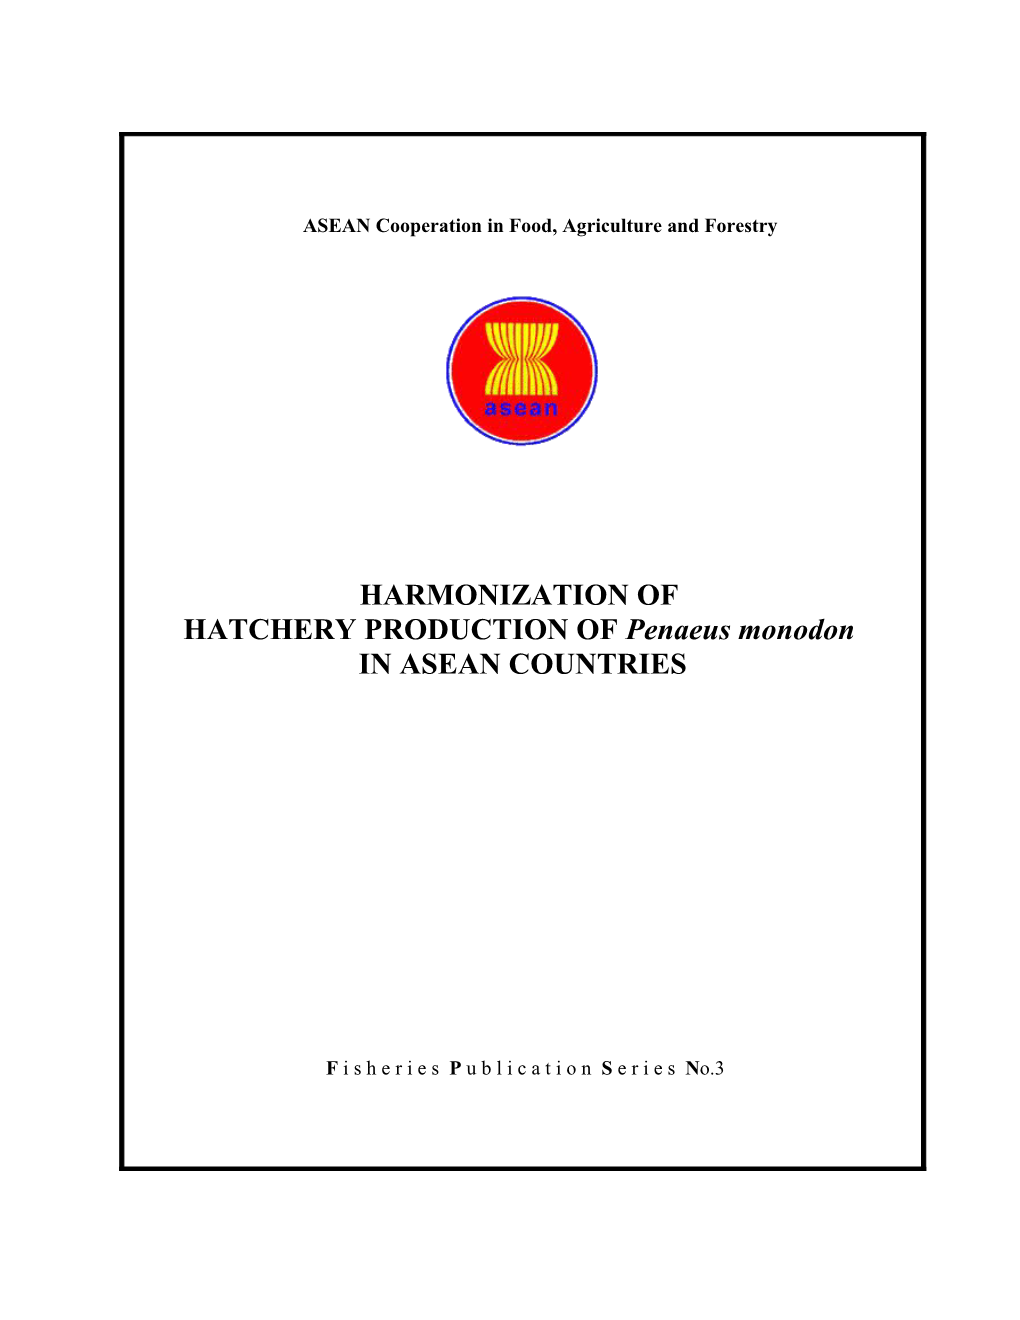 Harmonization of Hatchery Production